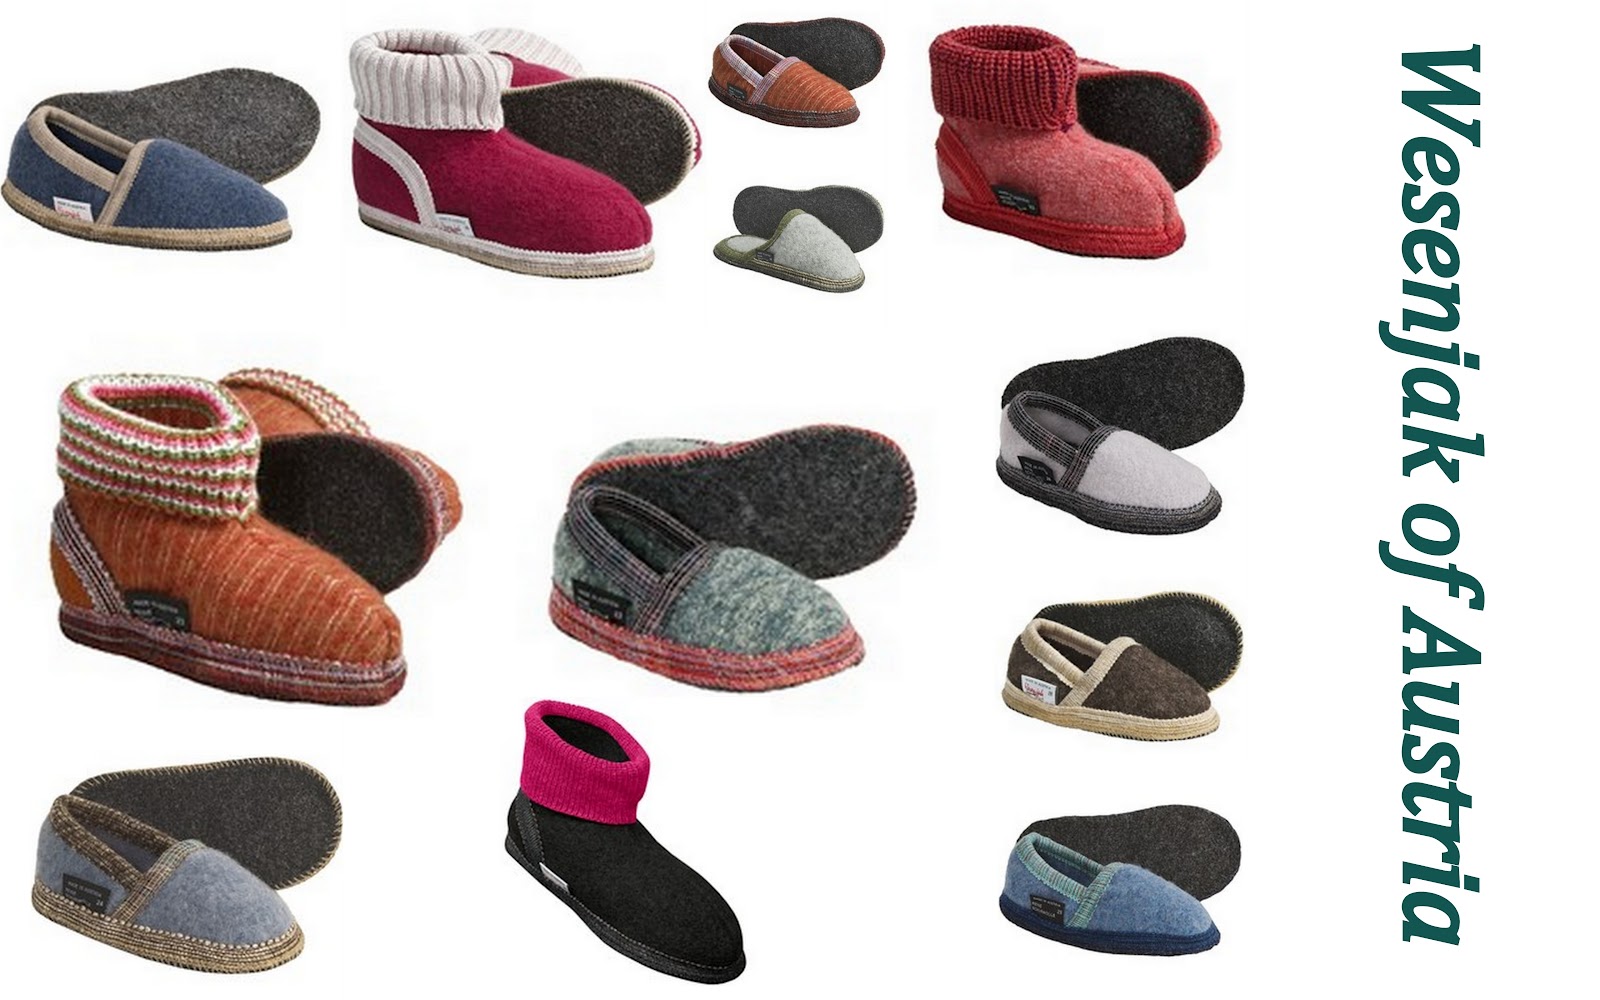 wesenjak slippers